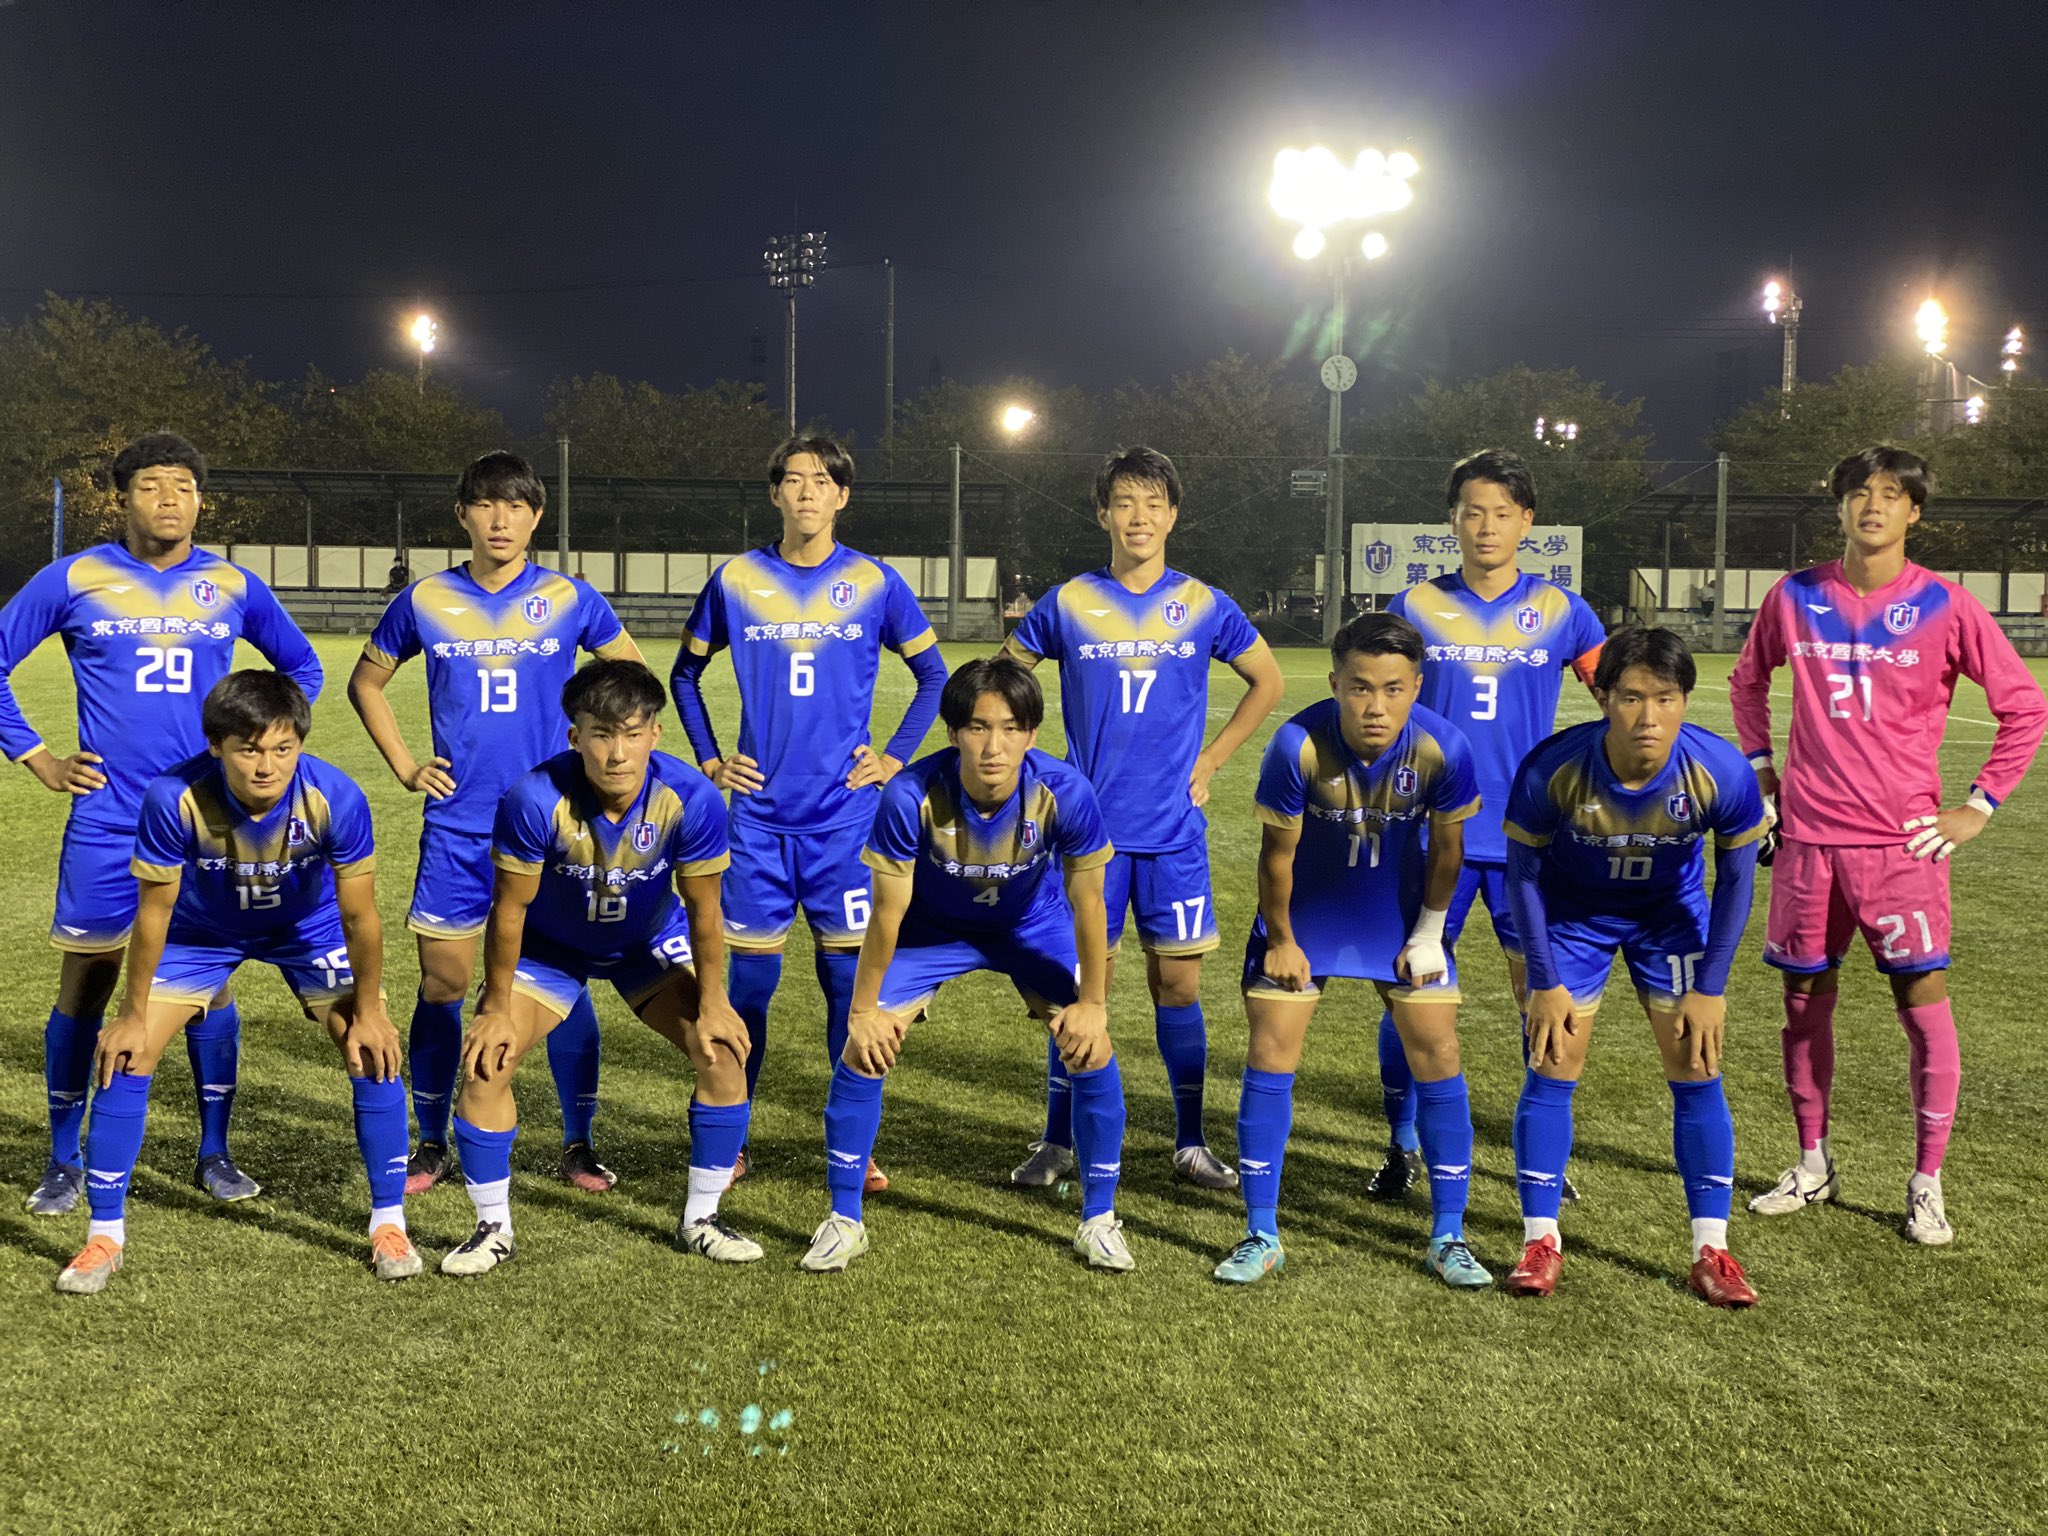 東京国際大学体育会サッカー部 Tiu Fc Twitter